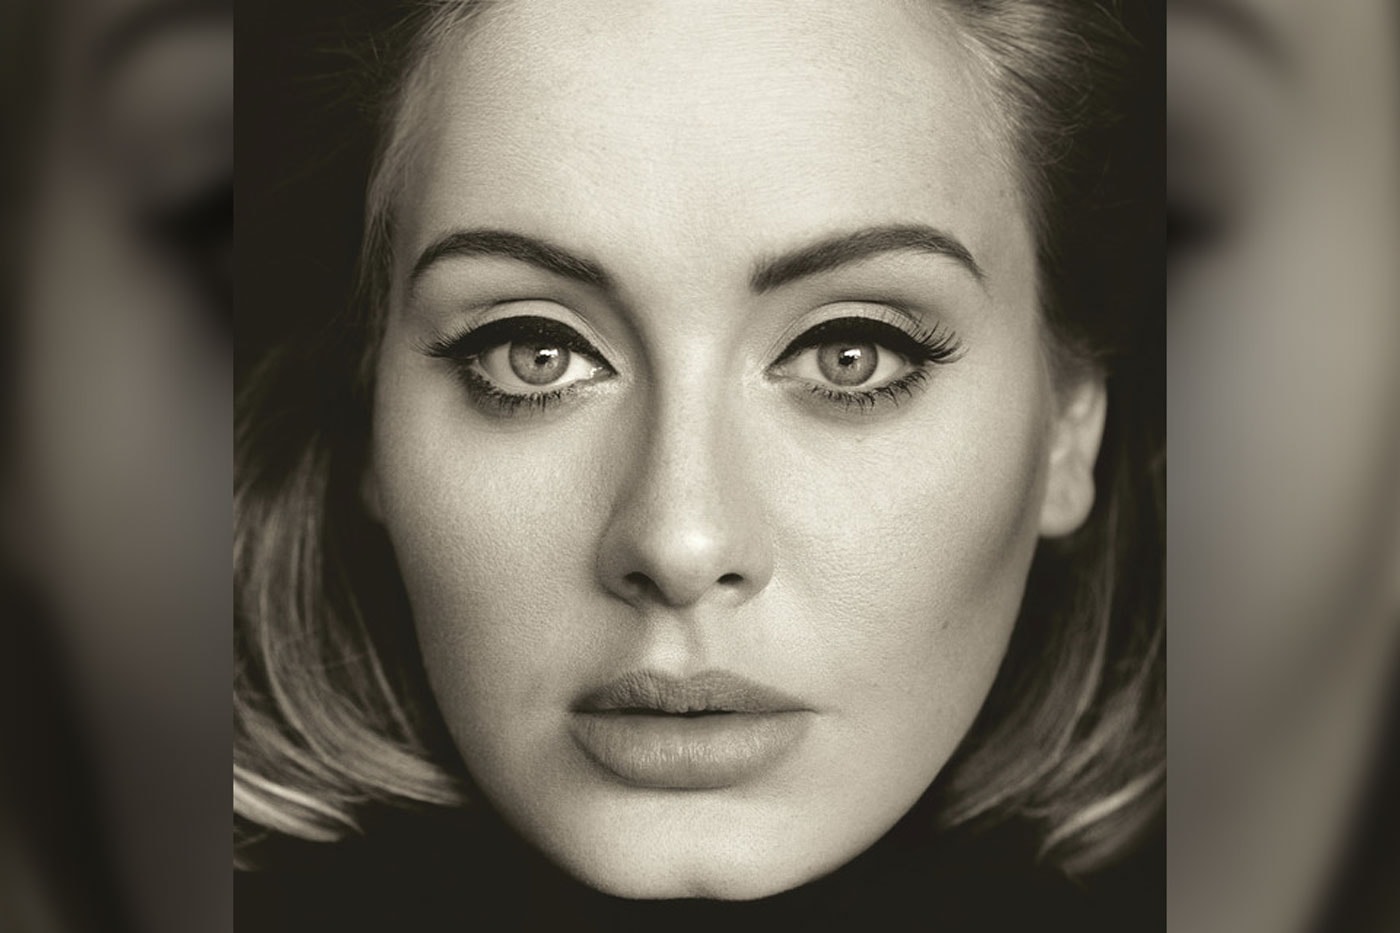 Adele Officially Announces New Album, '25'